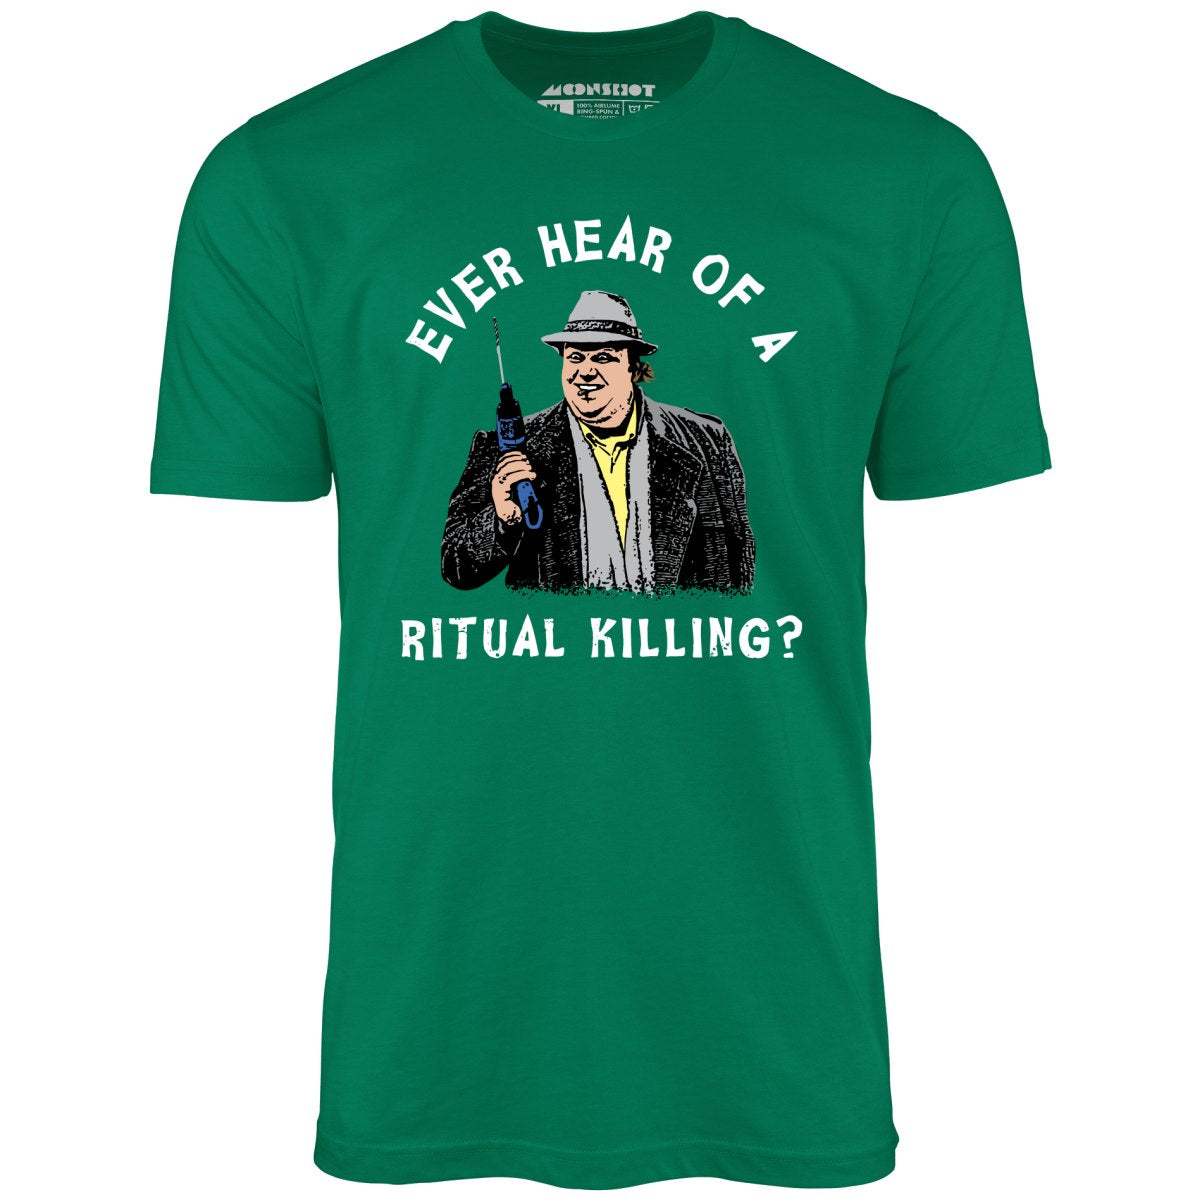 Ever Hear of a Ritual Killing? - Unisex T-Shirt